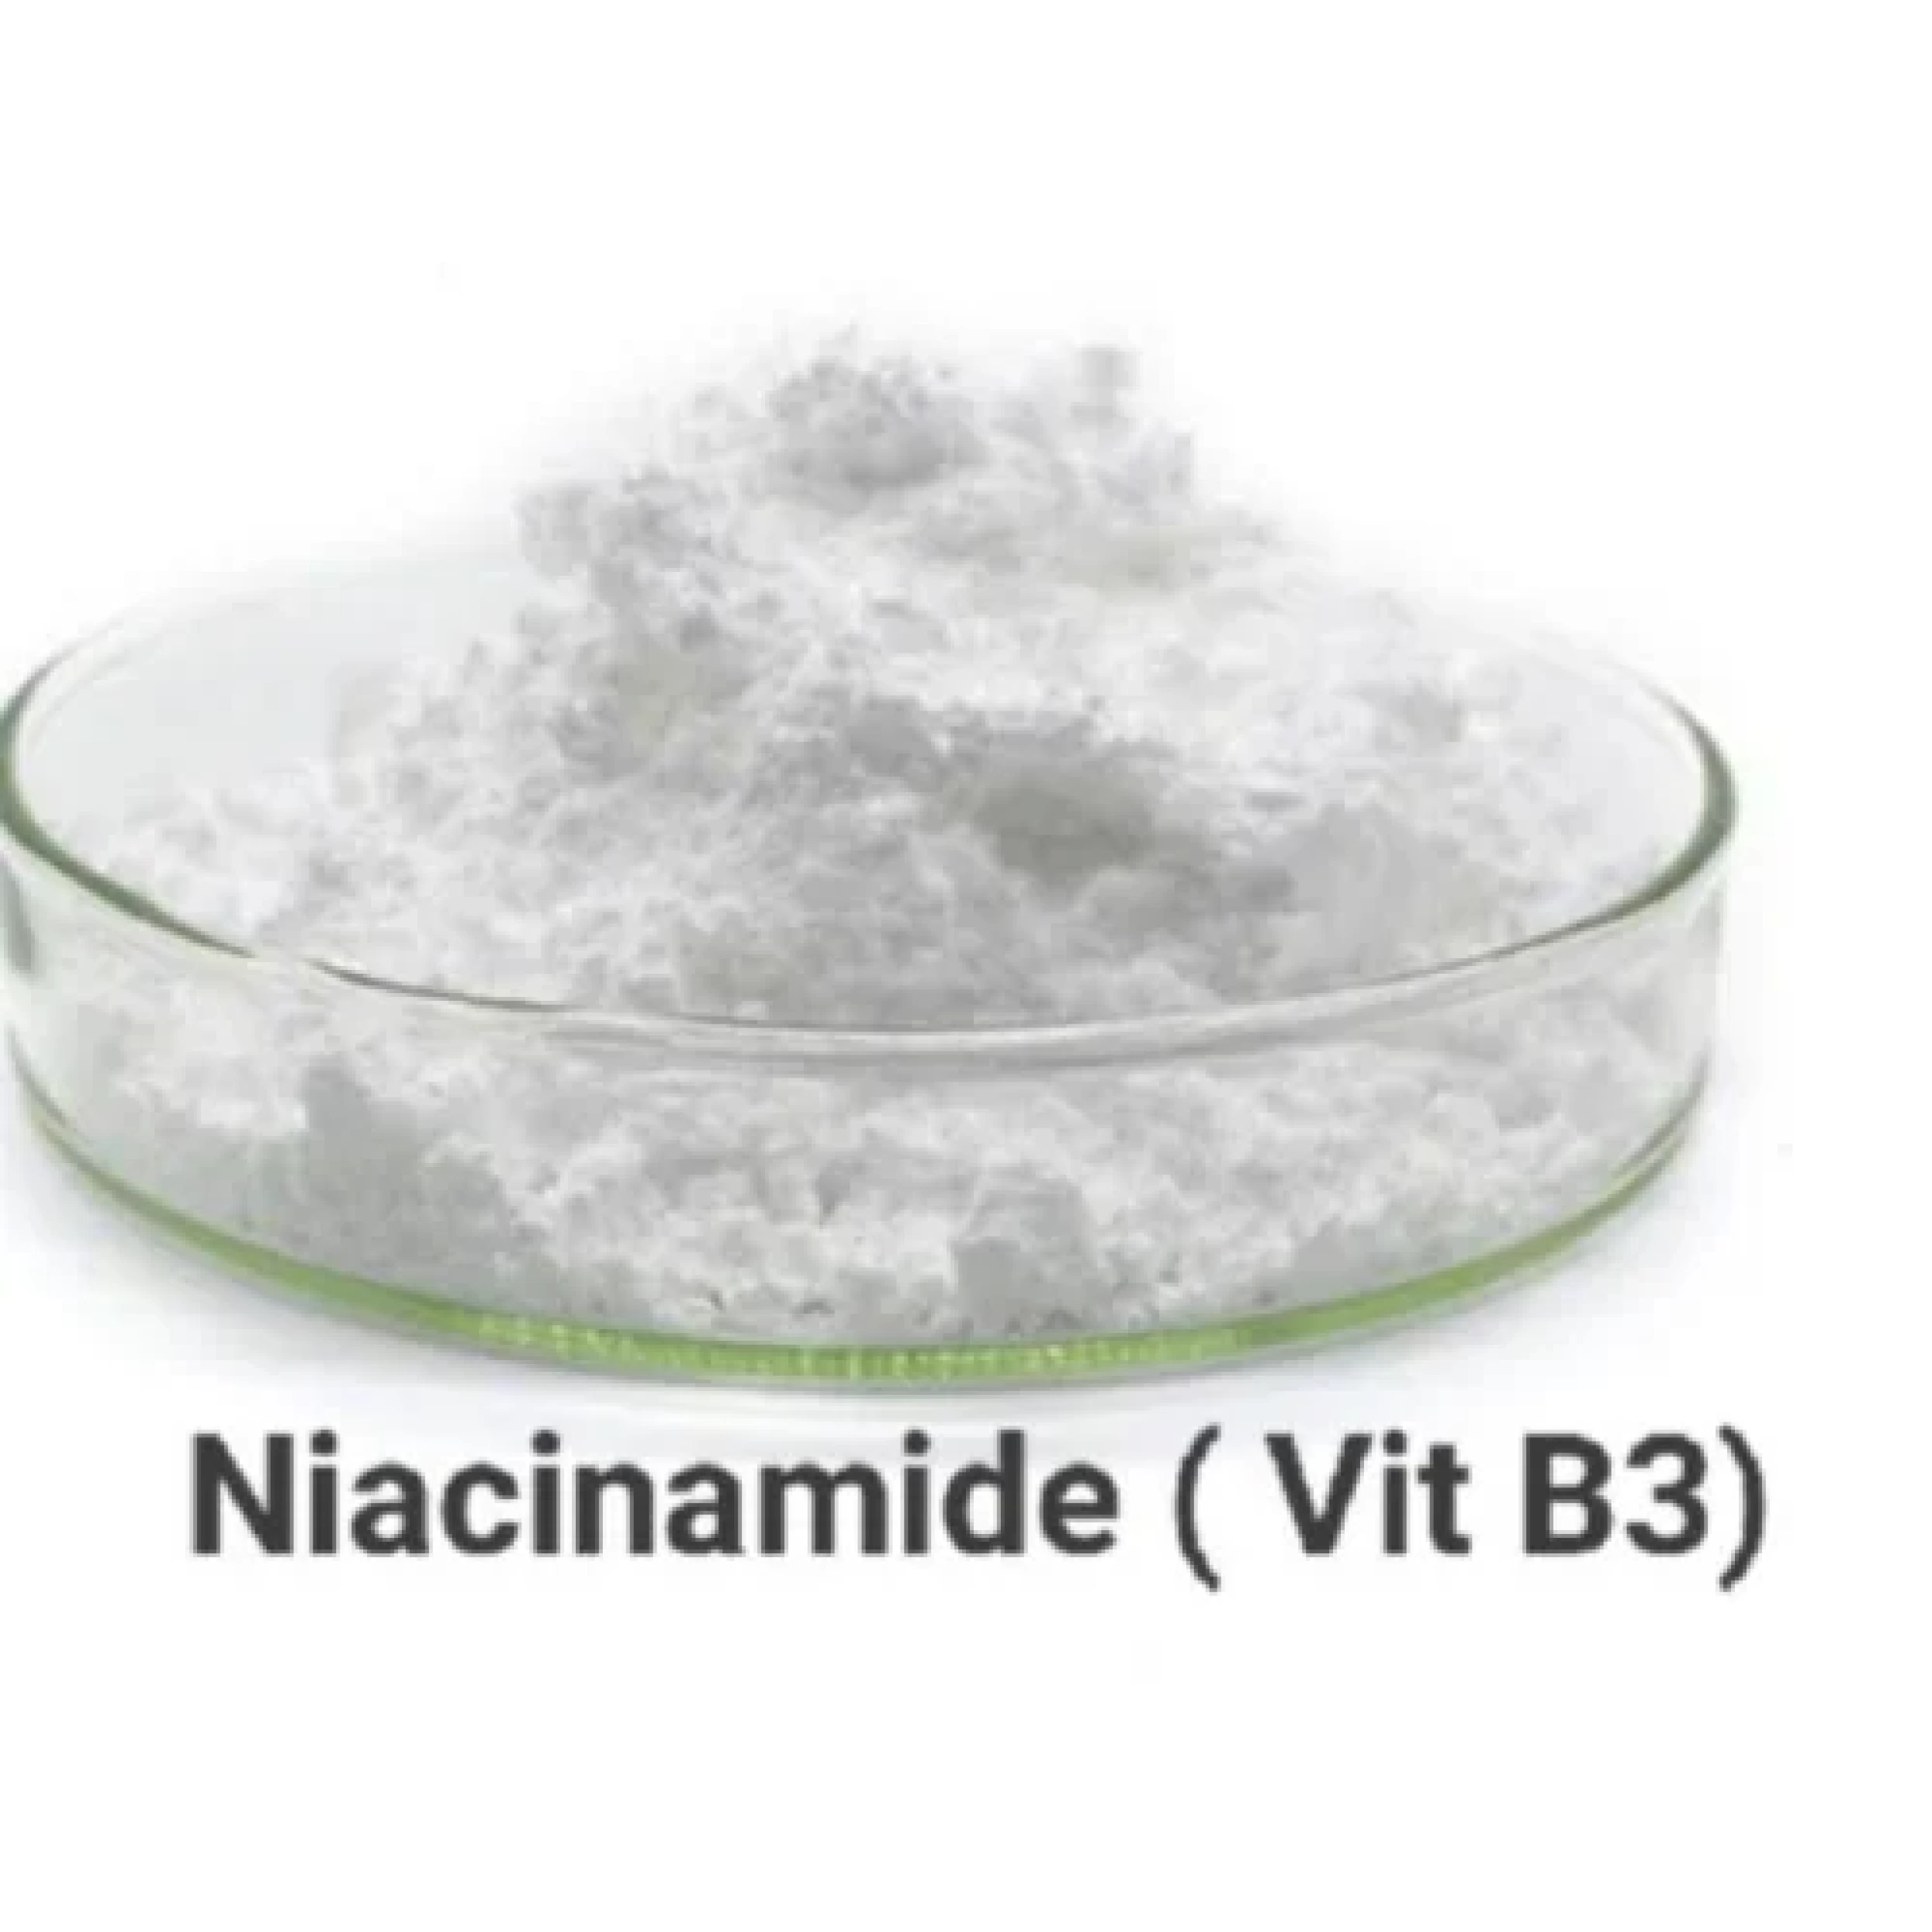 Niacinamide - Vit B3